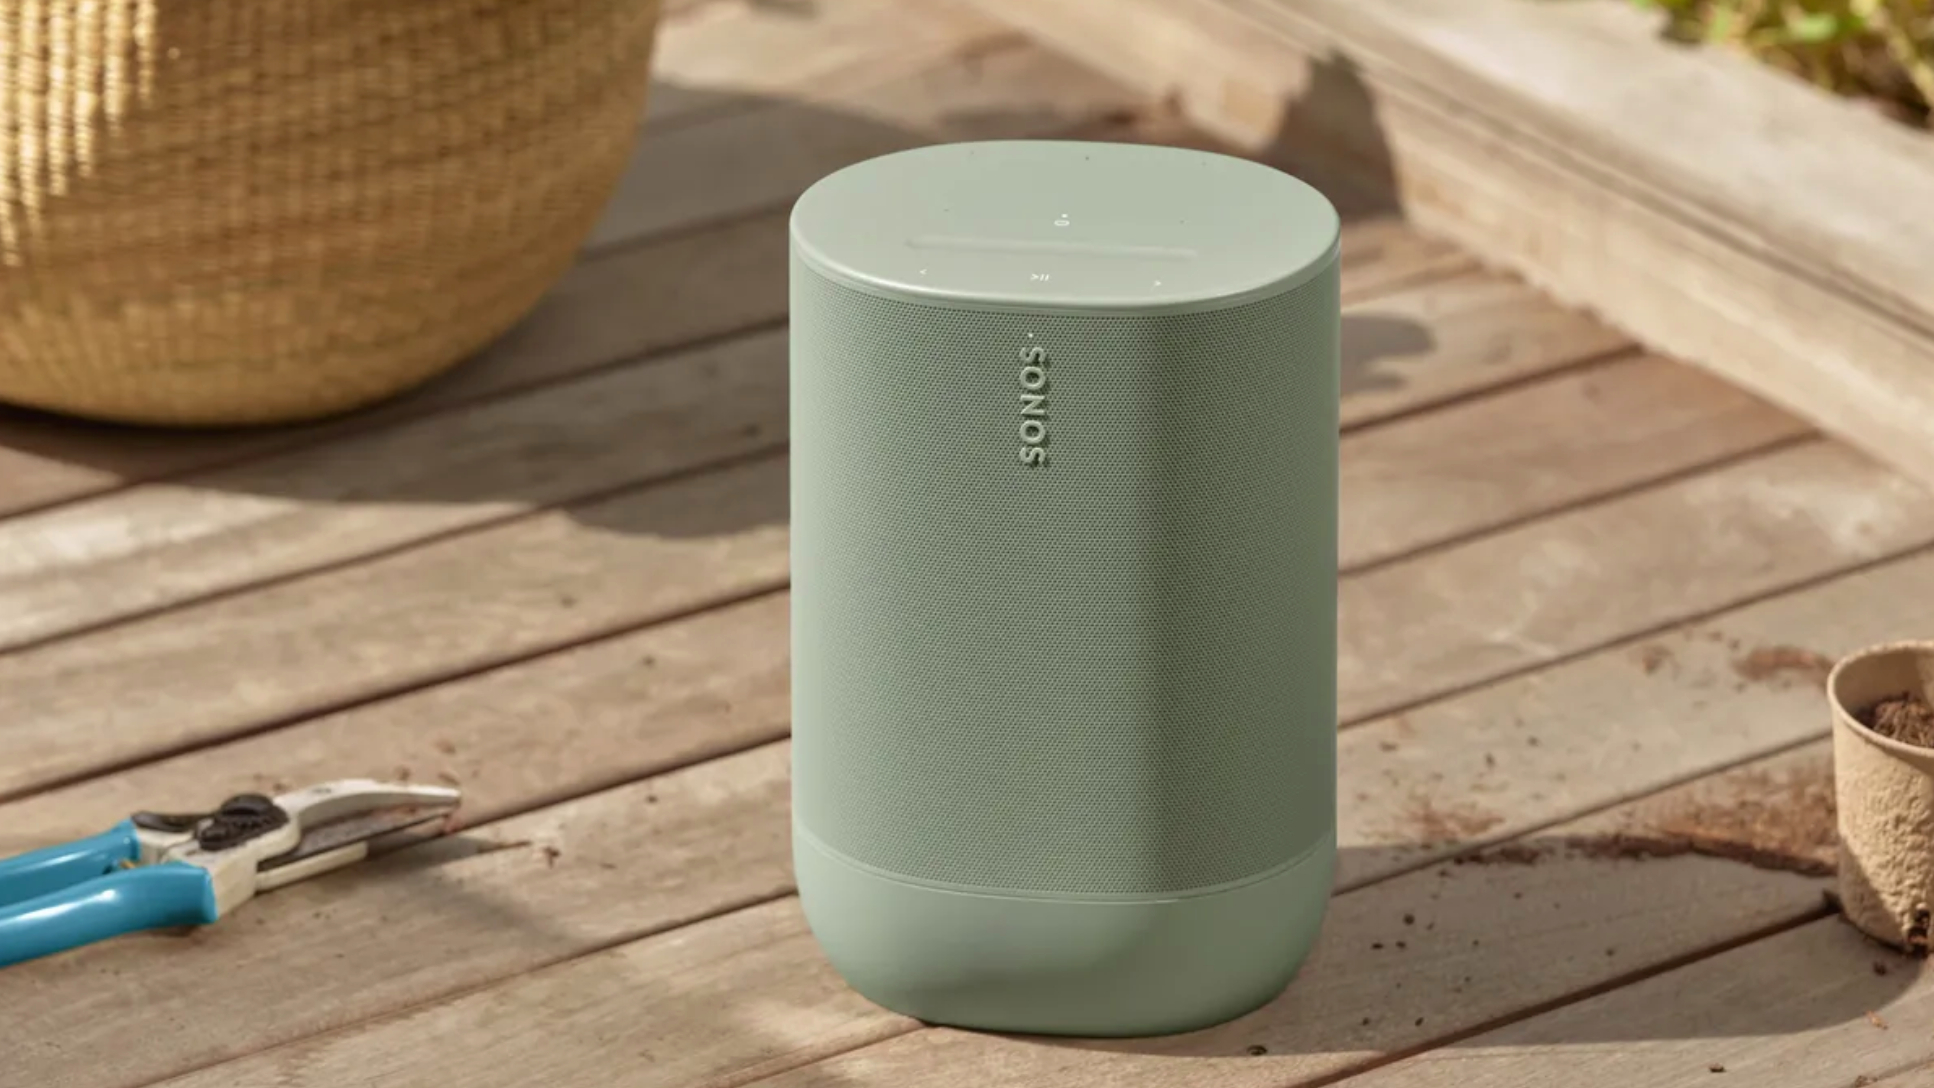 An olive green Sonos speaker on wooden decking